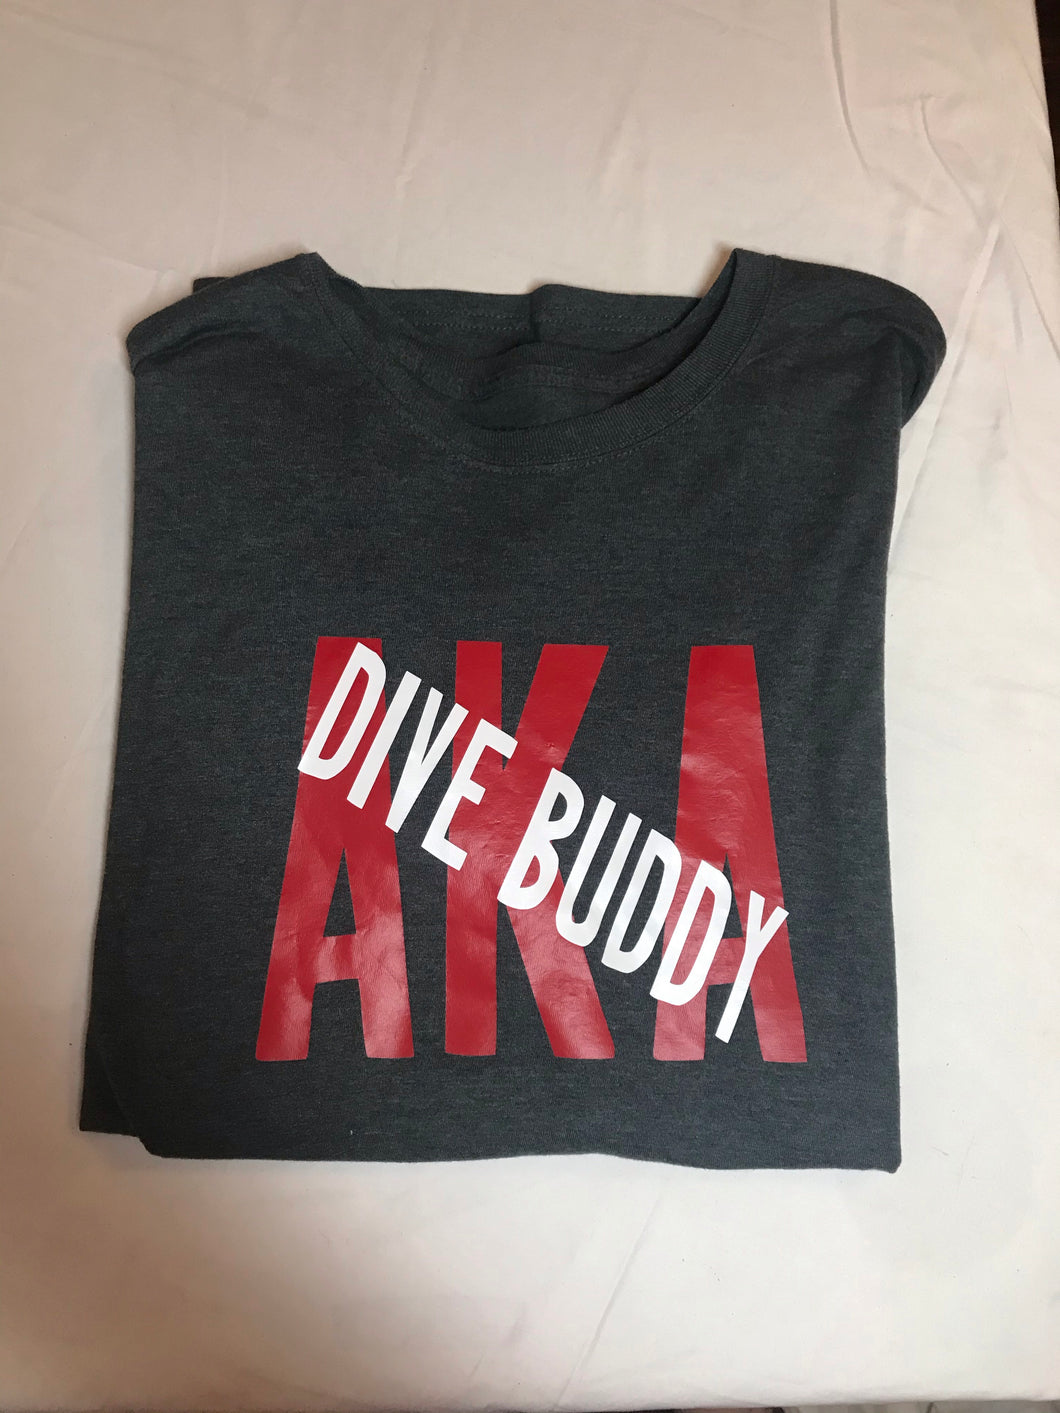 AKA Dive Buddy Shirt